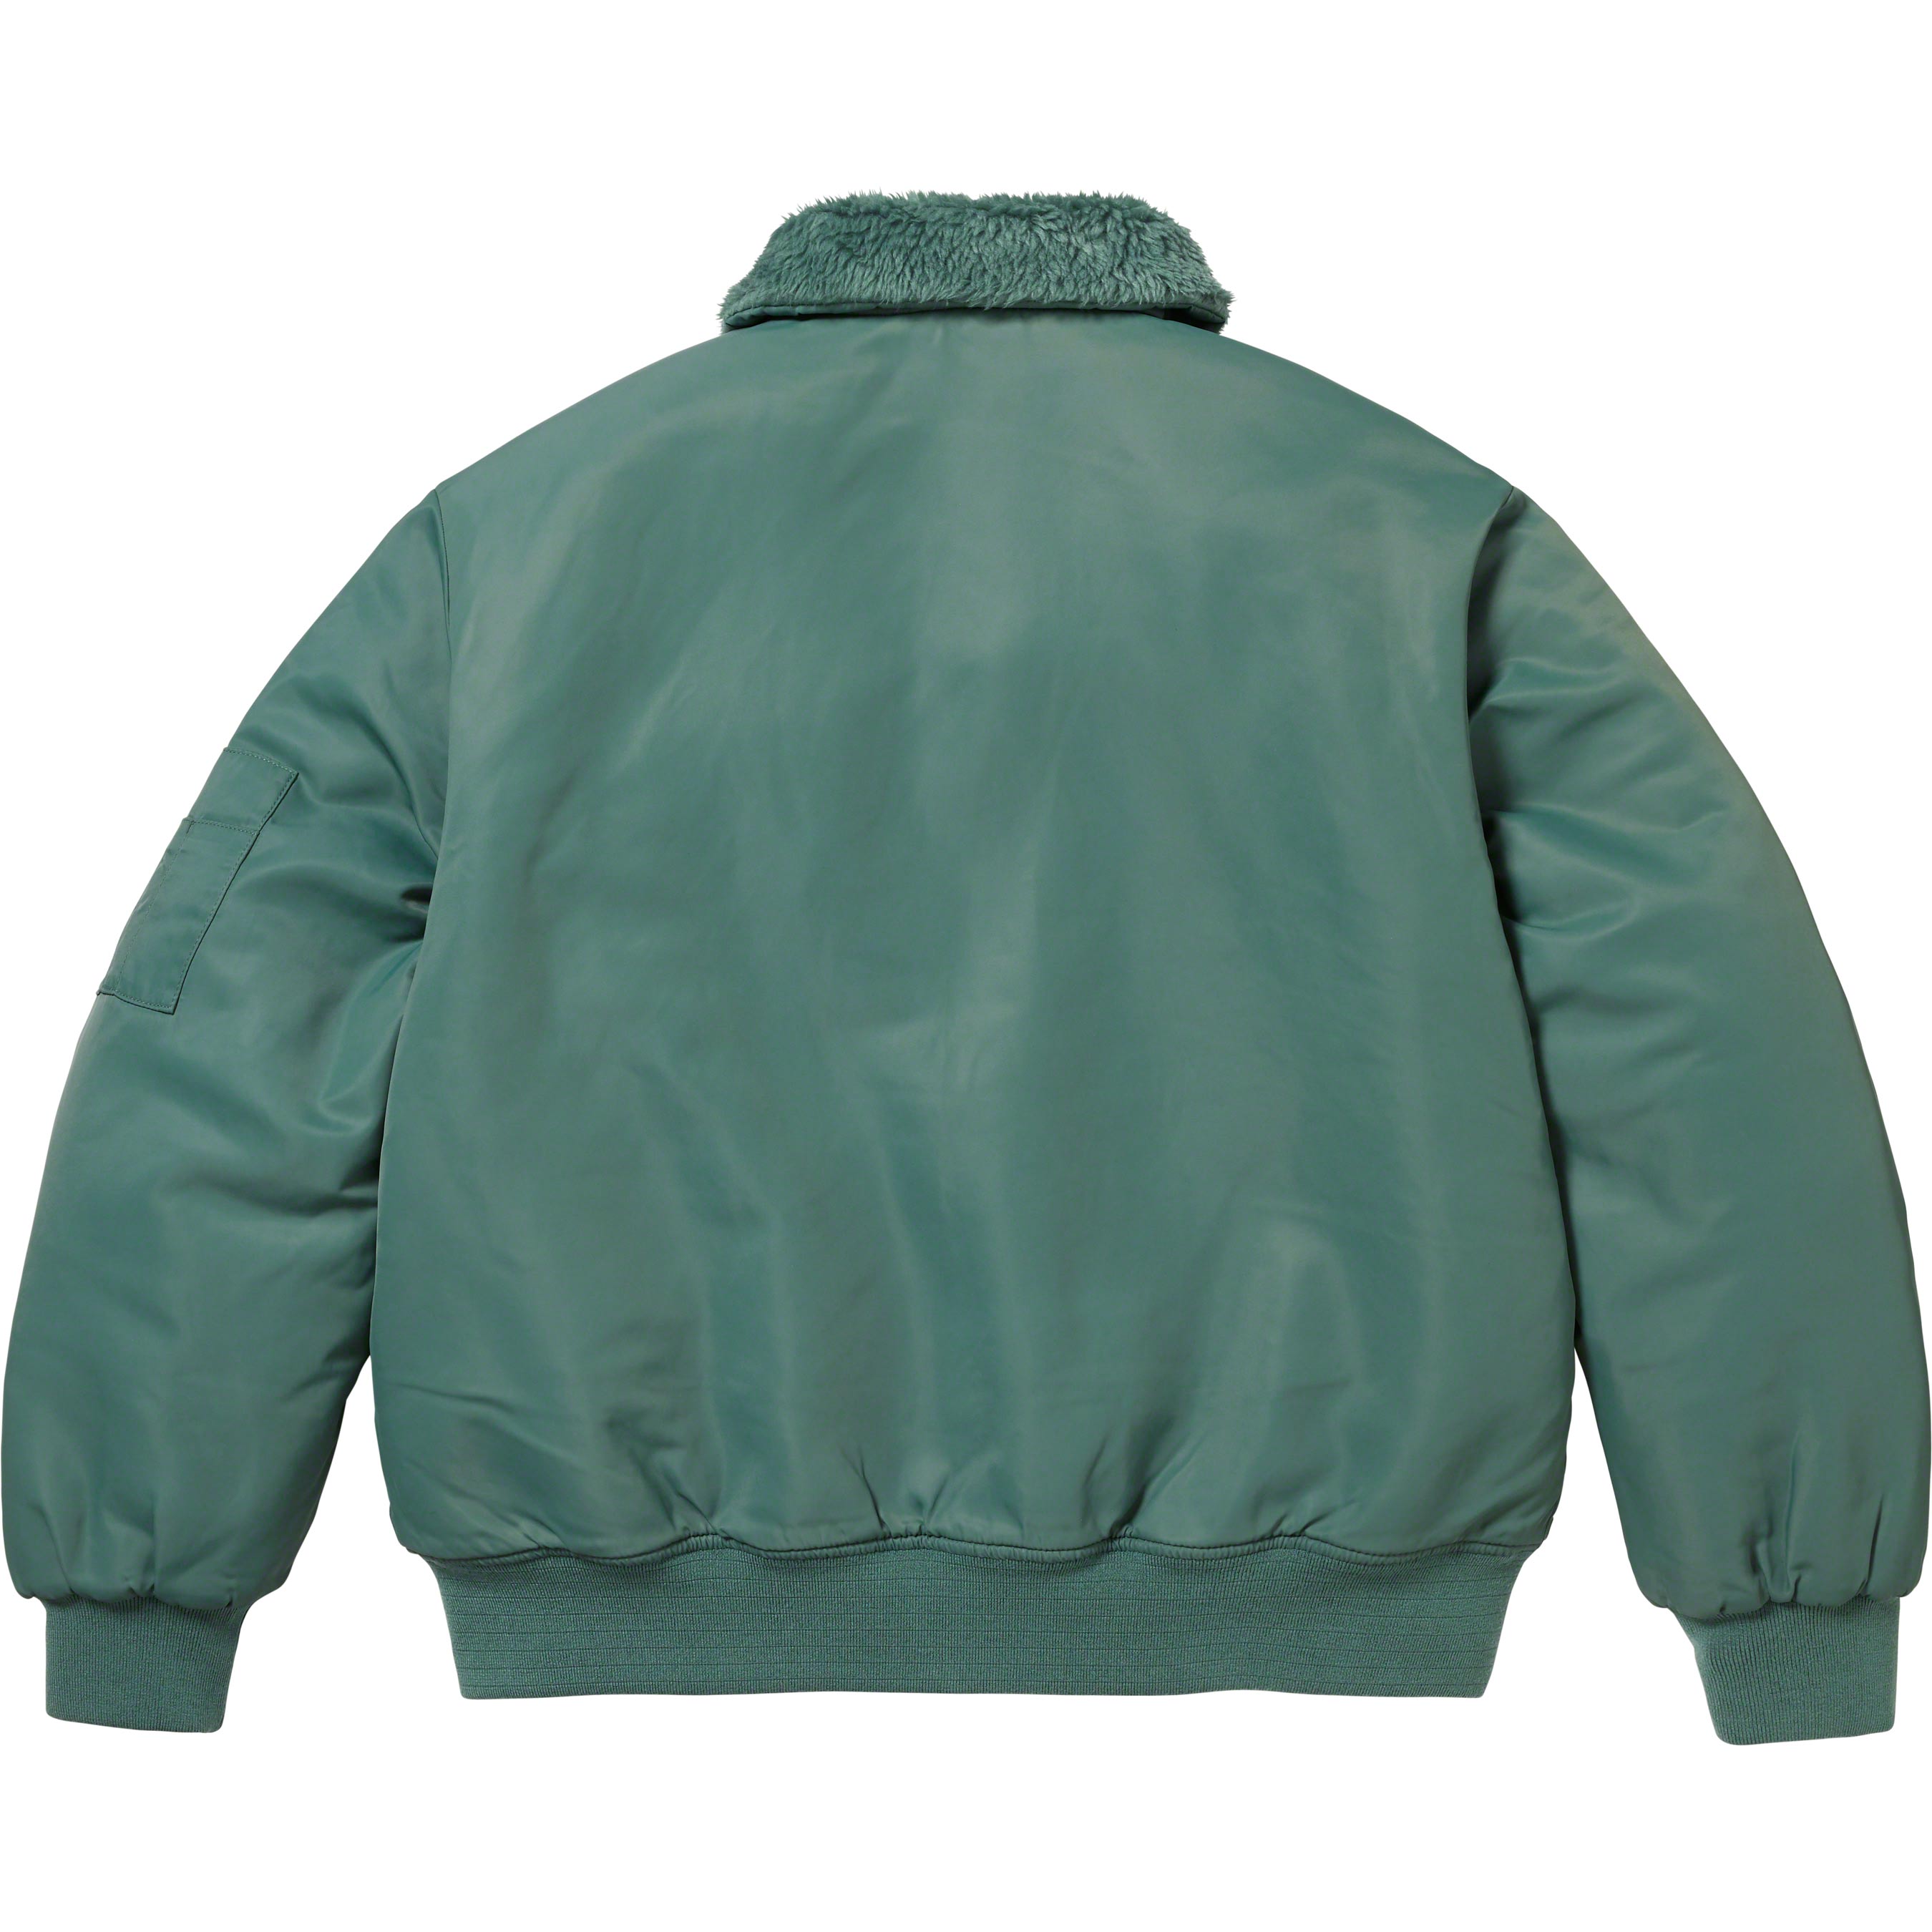 supreme/dickies fur collar bomber jacket希望は35000円です ...